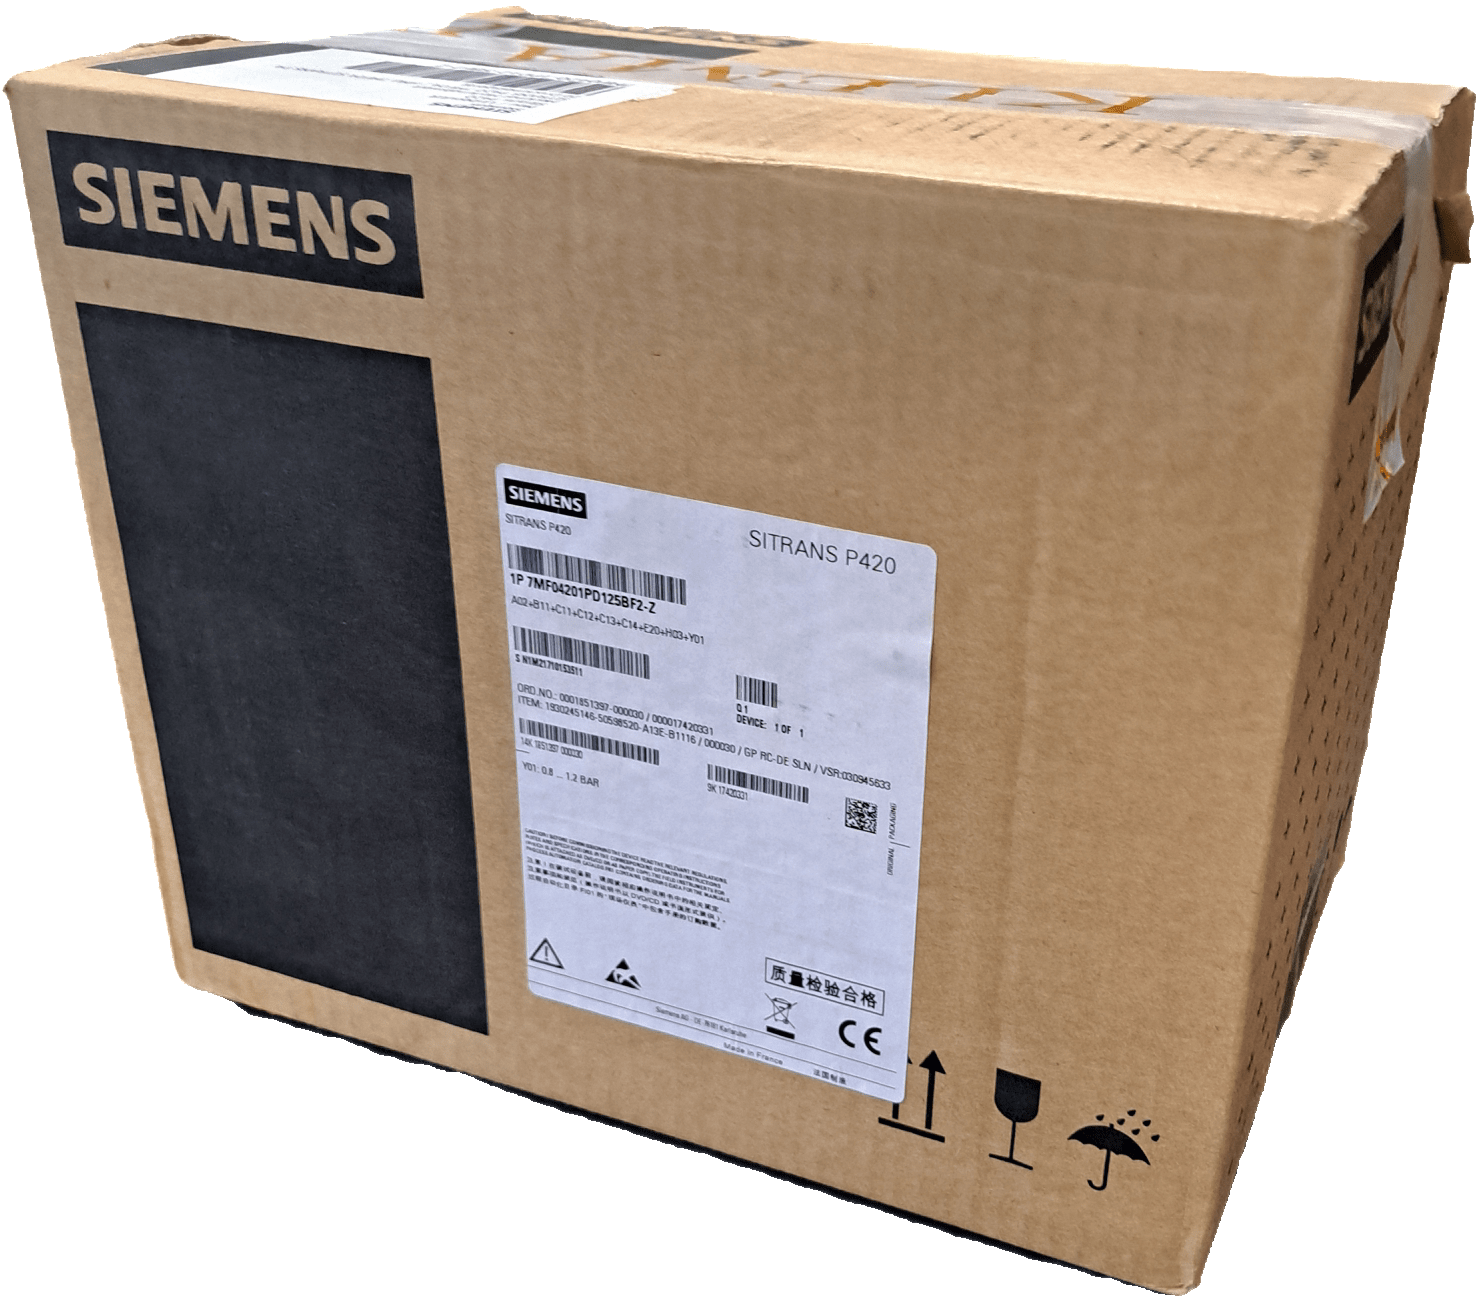 Siemens 7MF0420-1PD12-5BF2-Z SITRANS P420 - #product_category# | Klenk Maschinenhandel